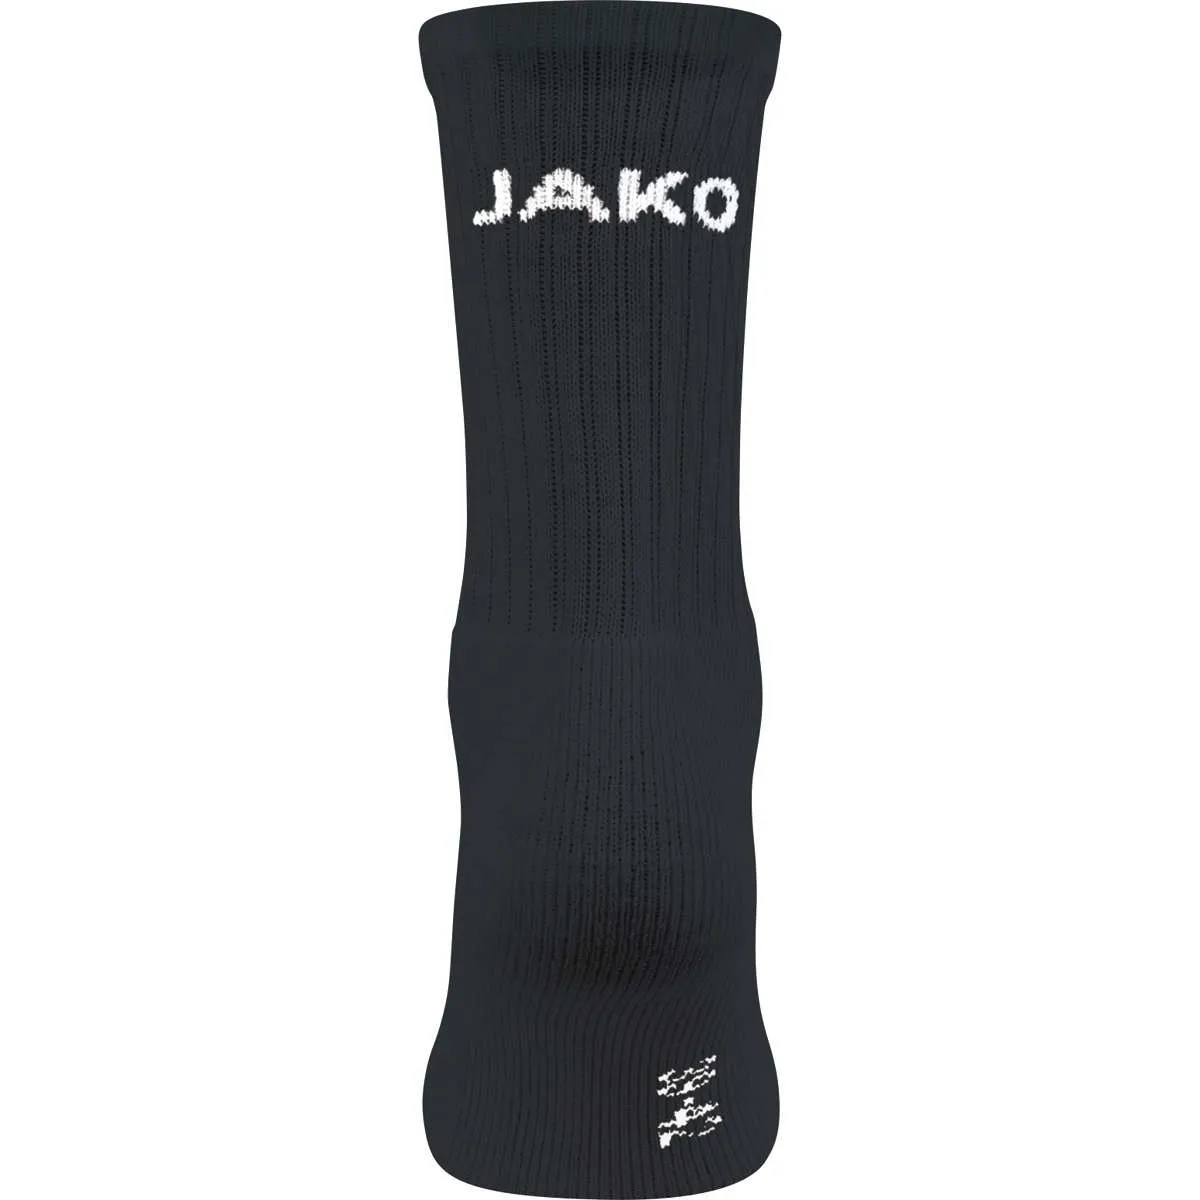 Jako sports socks long black, pack of 3